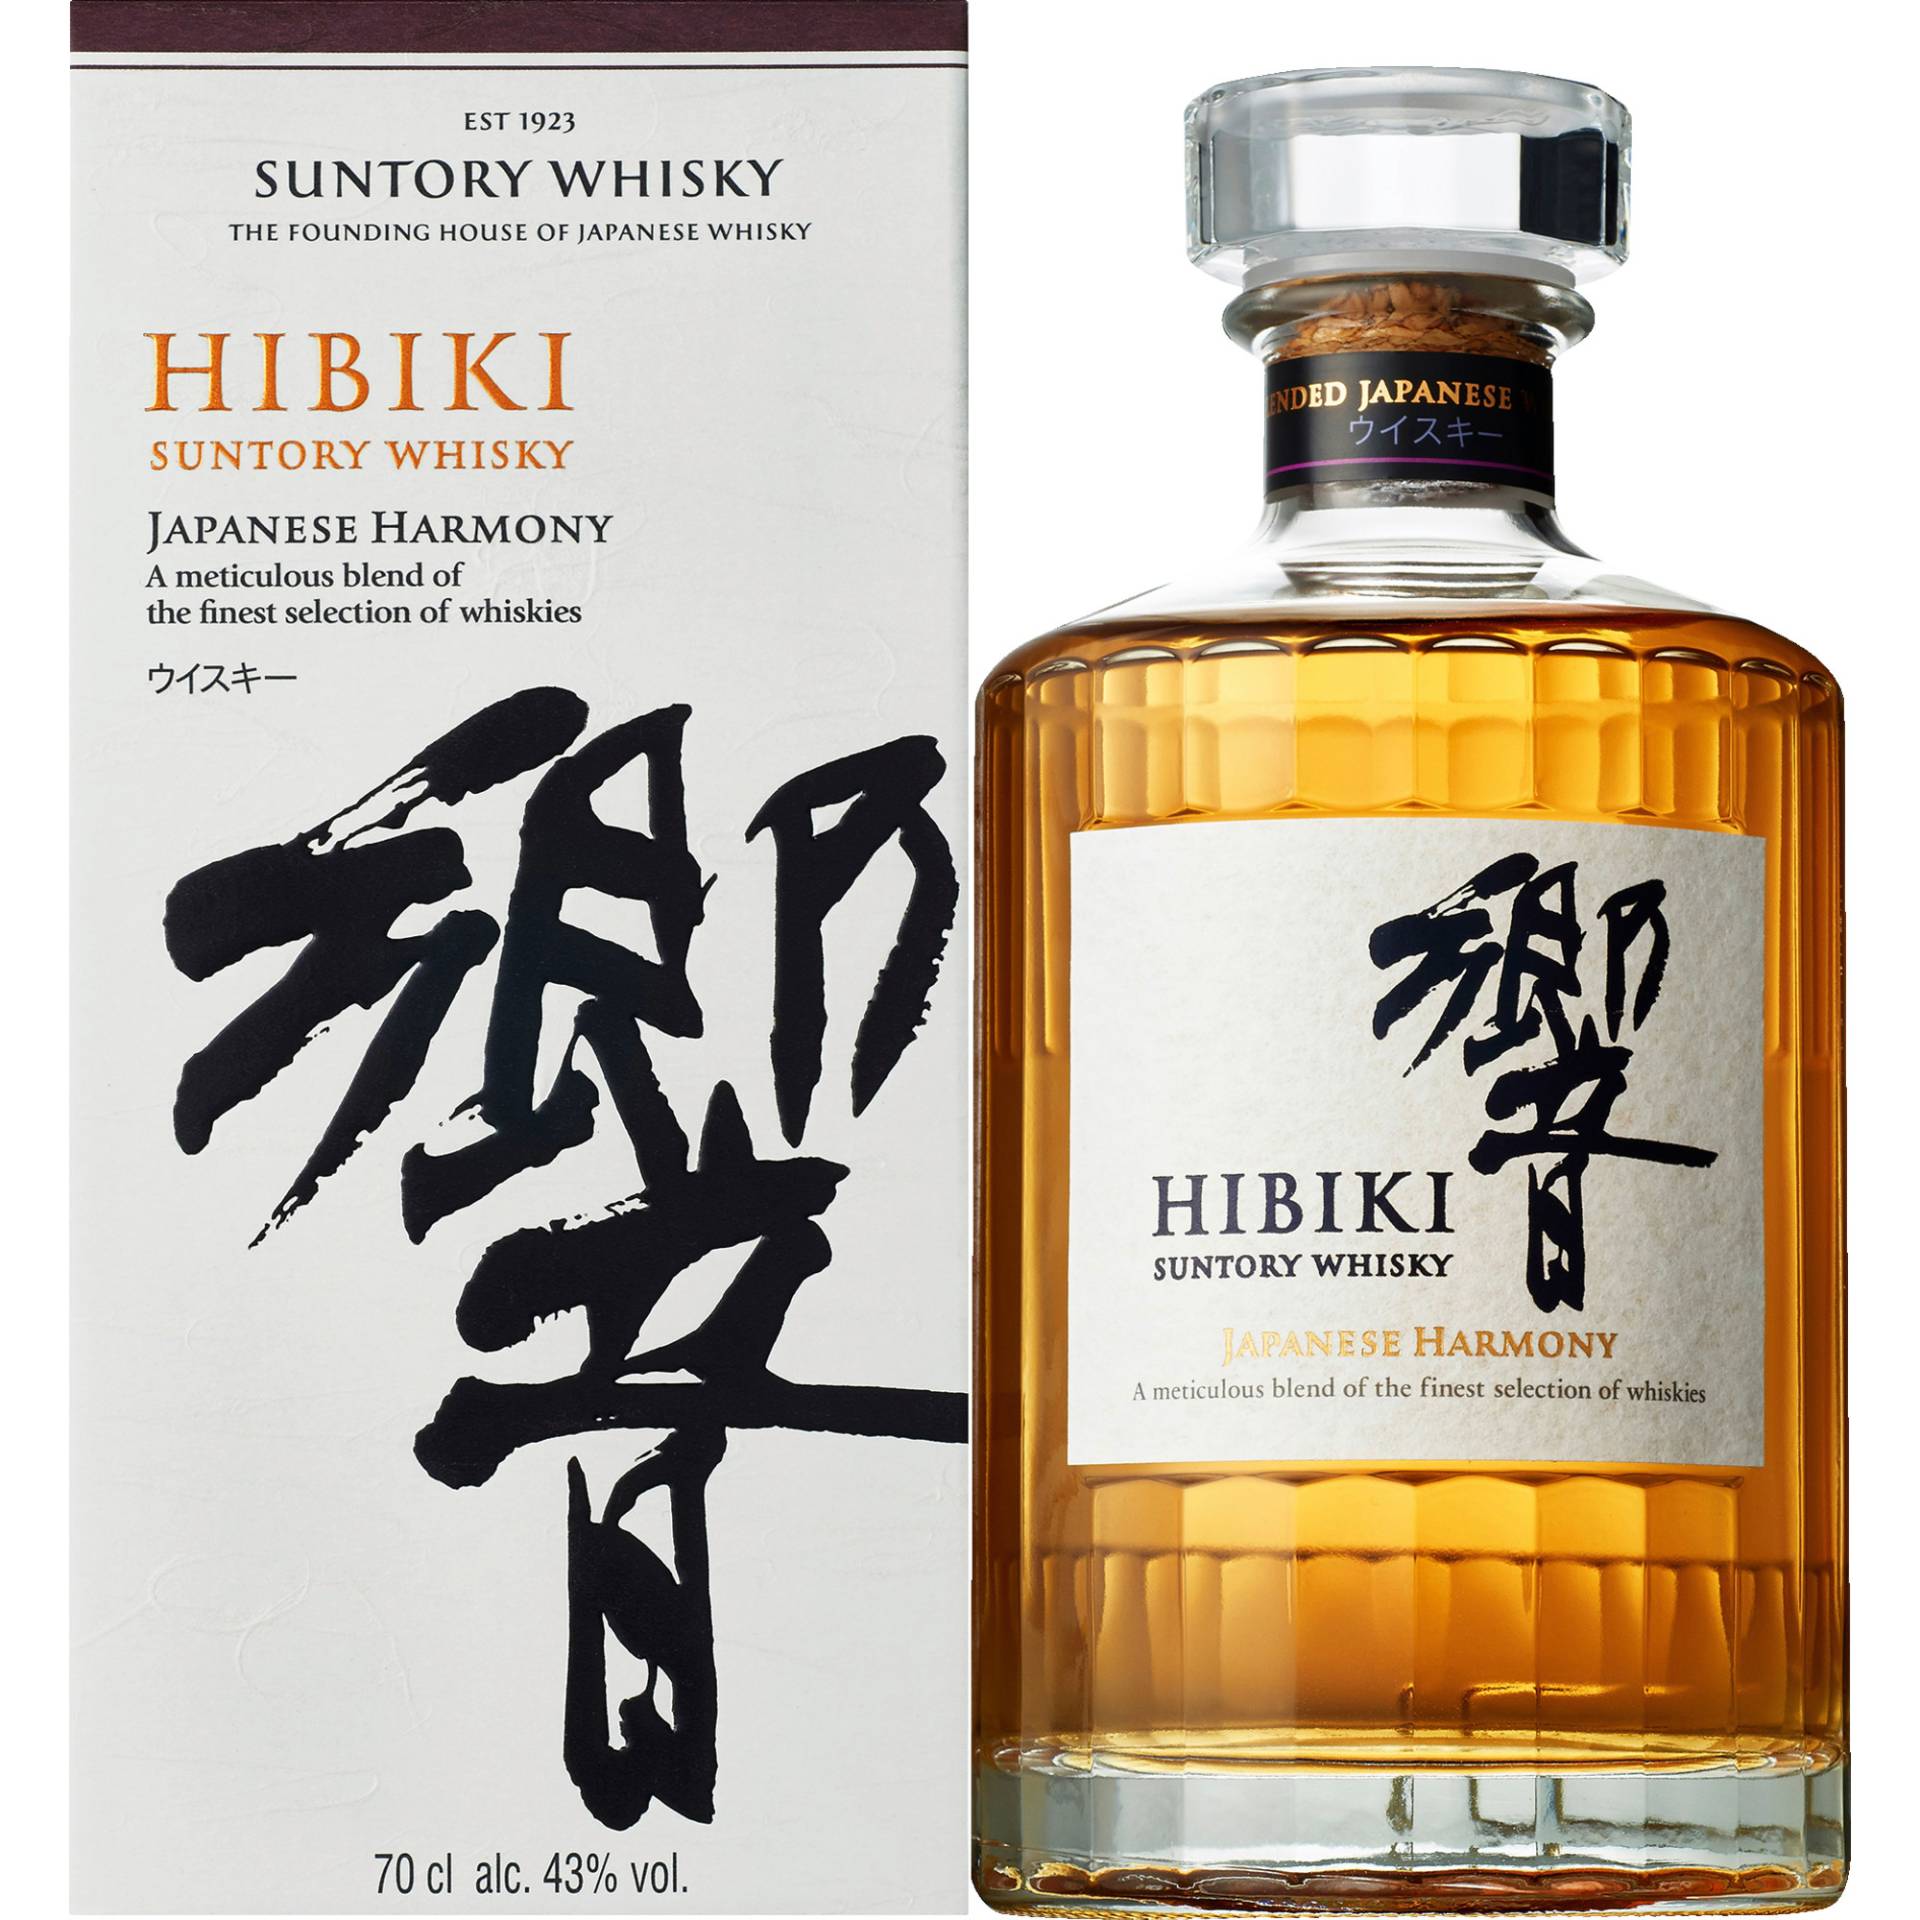 Suntory Hibiki Harmony Blended Japanese Whisky, 0,7 L, 43% Vol., Spirituosen von Morrison Bowmore Distillers Limited, Glasgow G21 1EQ, UK